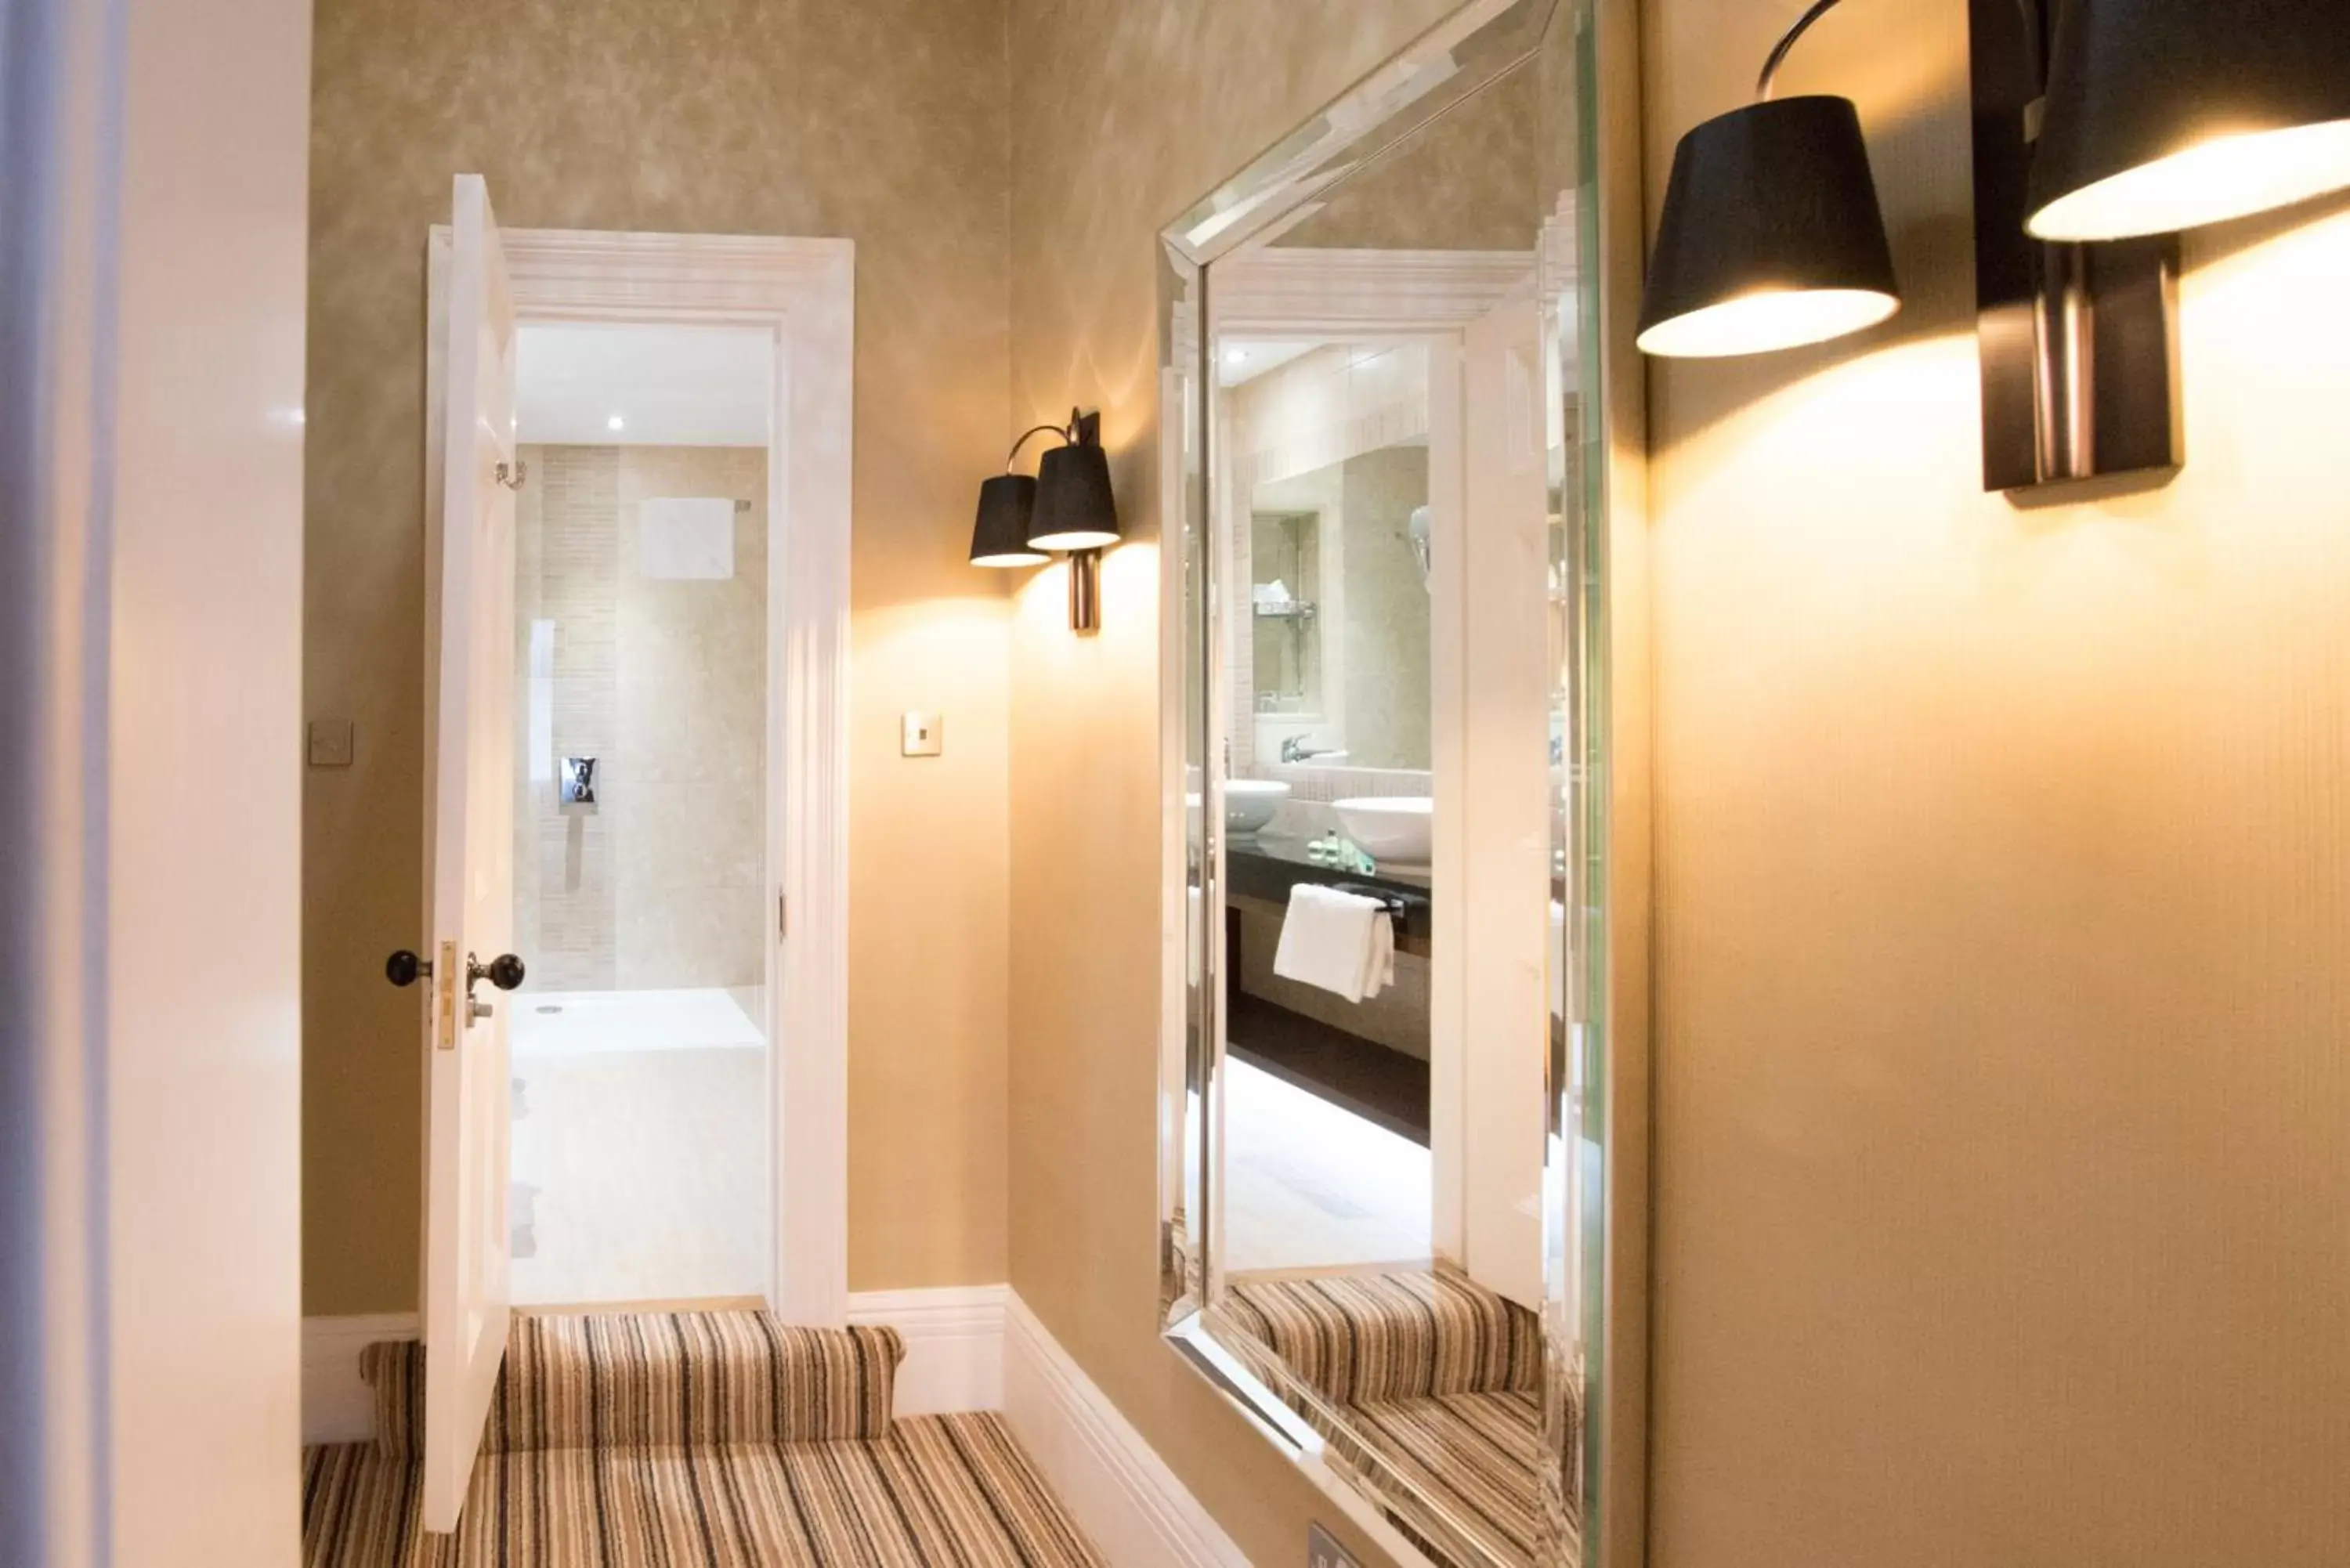 Photo of the whole room, Bathroom in Best Western Plus Burlington Hotel